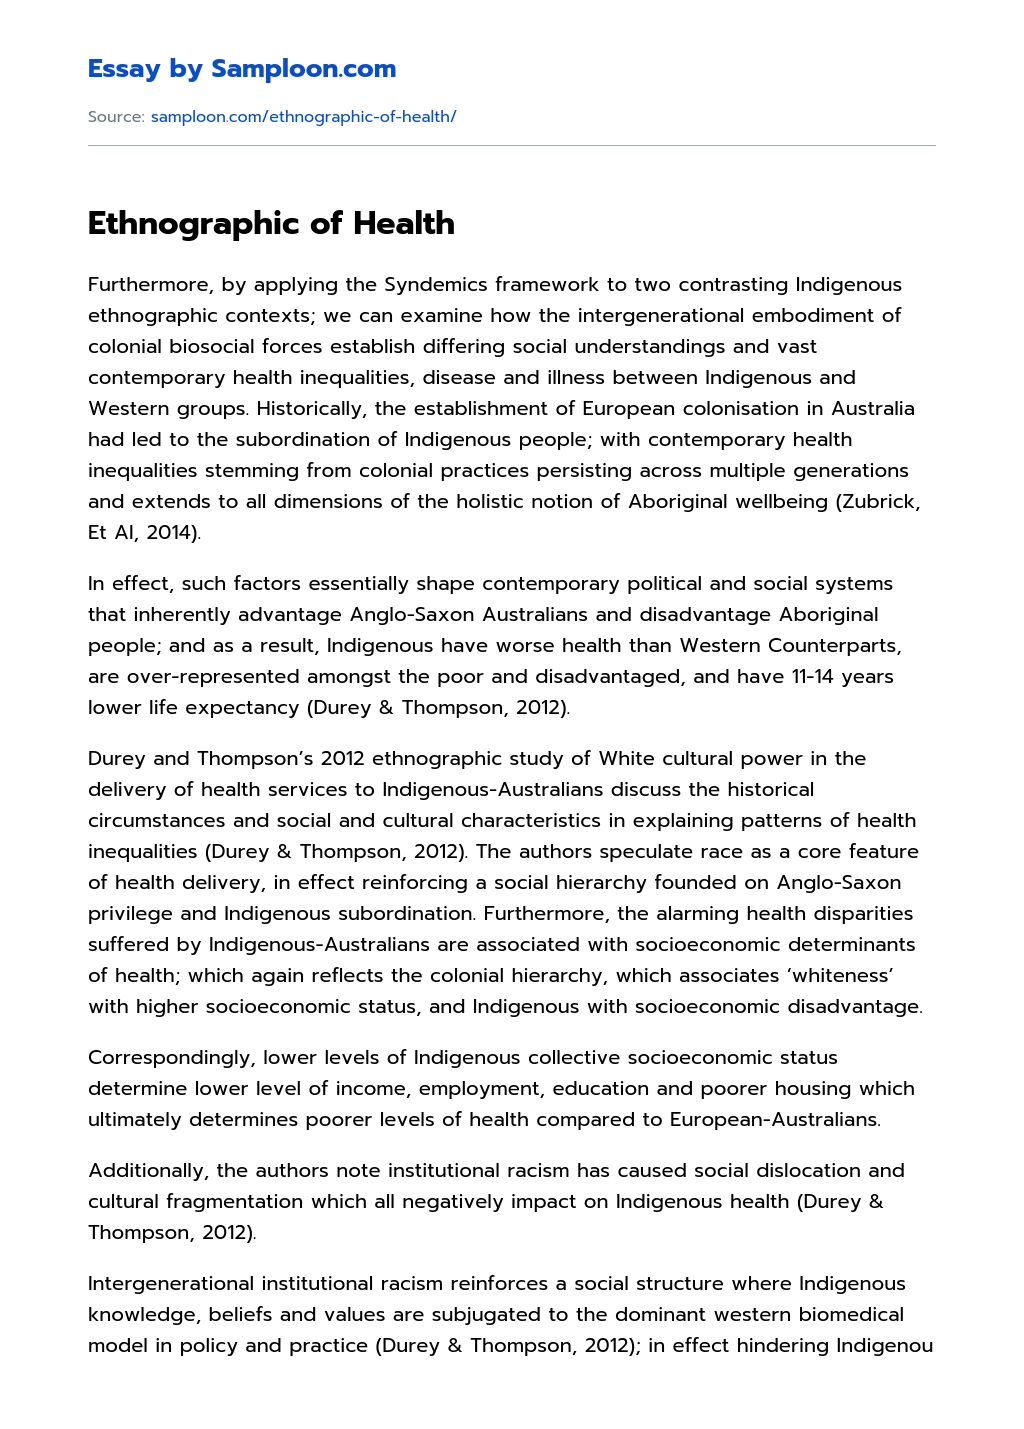 Ethnographic of Health essay